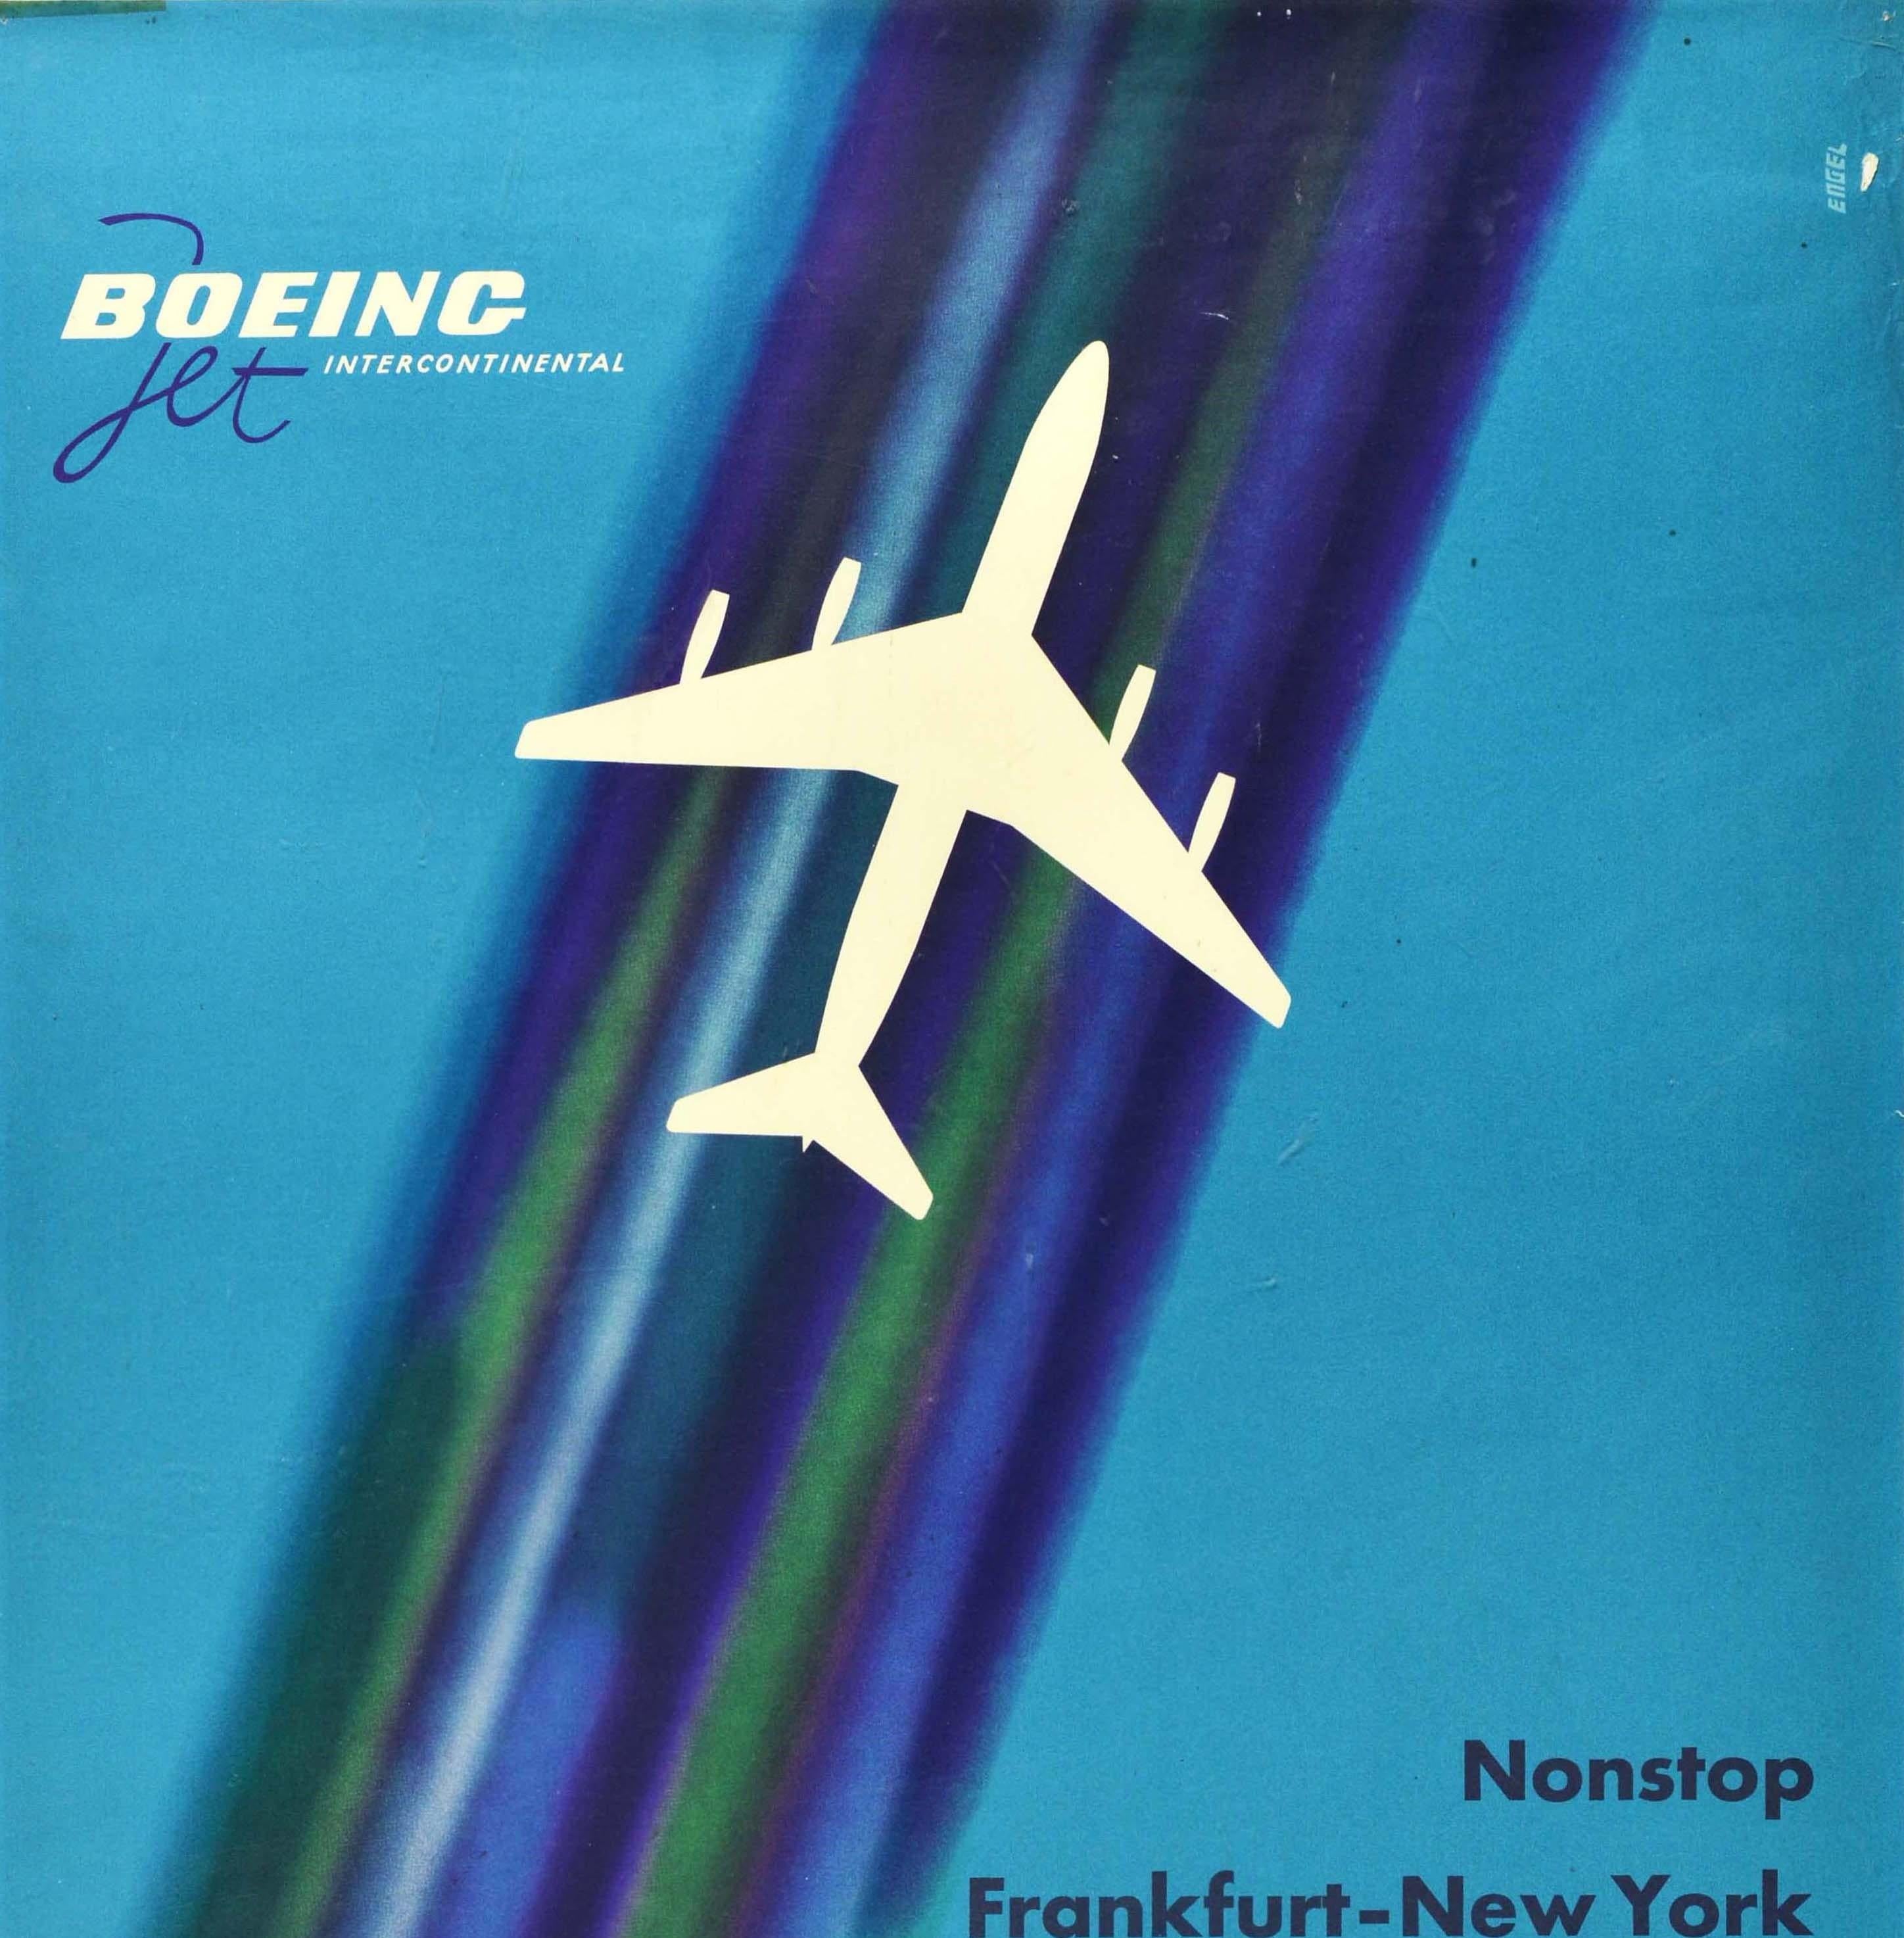 Original Vintage Poster Lufthansa Boeing Jet Nonstop Frankfurt New York Chicago - Print by Engel